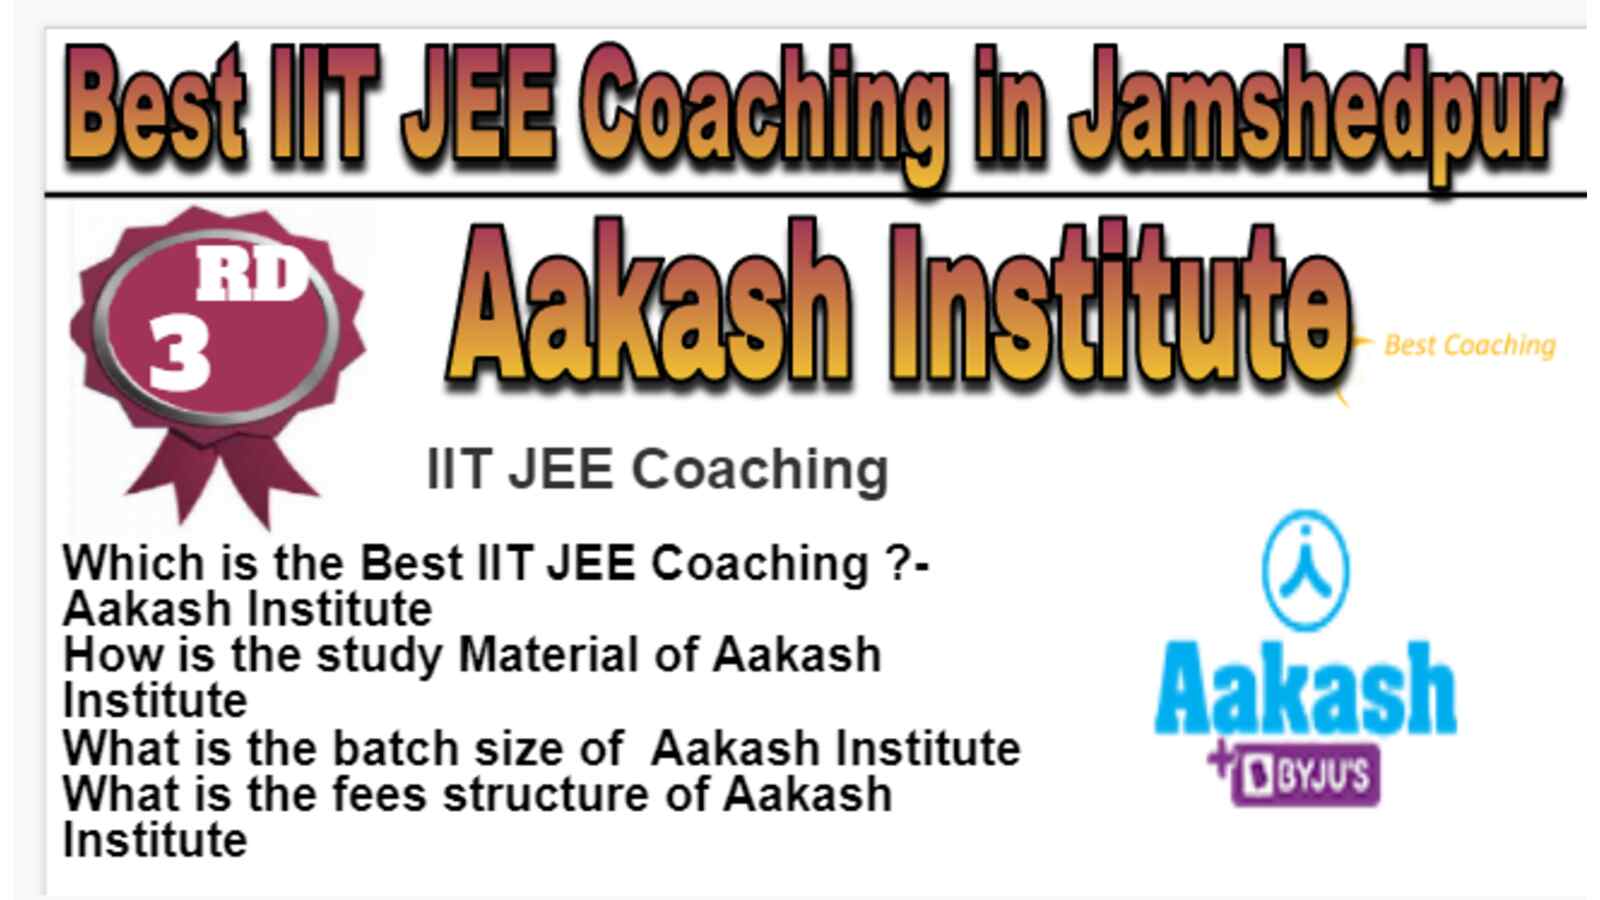 Rank 3 Best IIT JEE Coaching in Jamshedpur